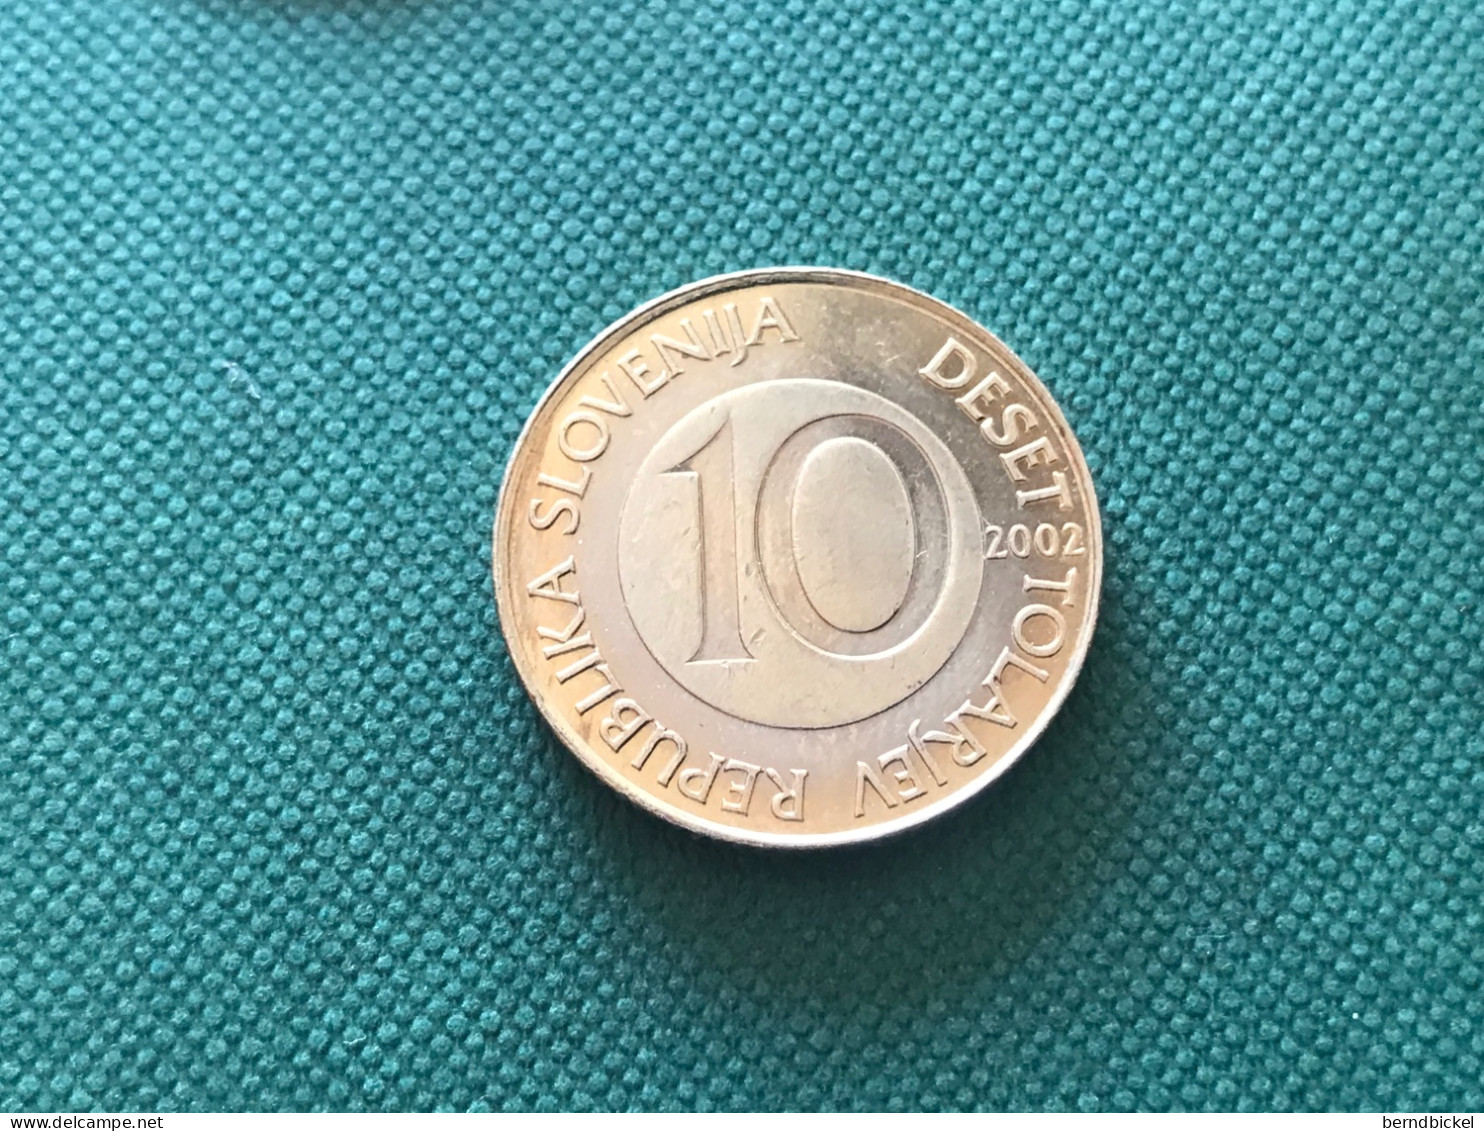 Münzen Münze Umlaufmünze Slowenien 10 Tolar 2002 - Slowenien